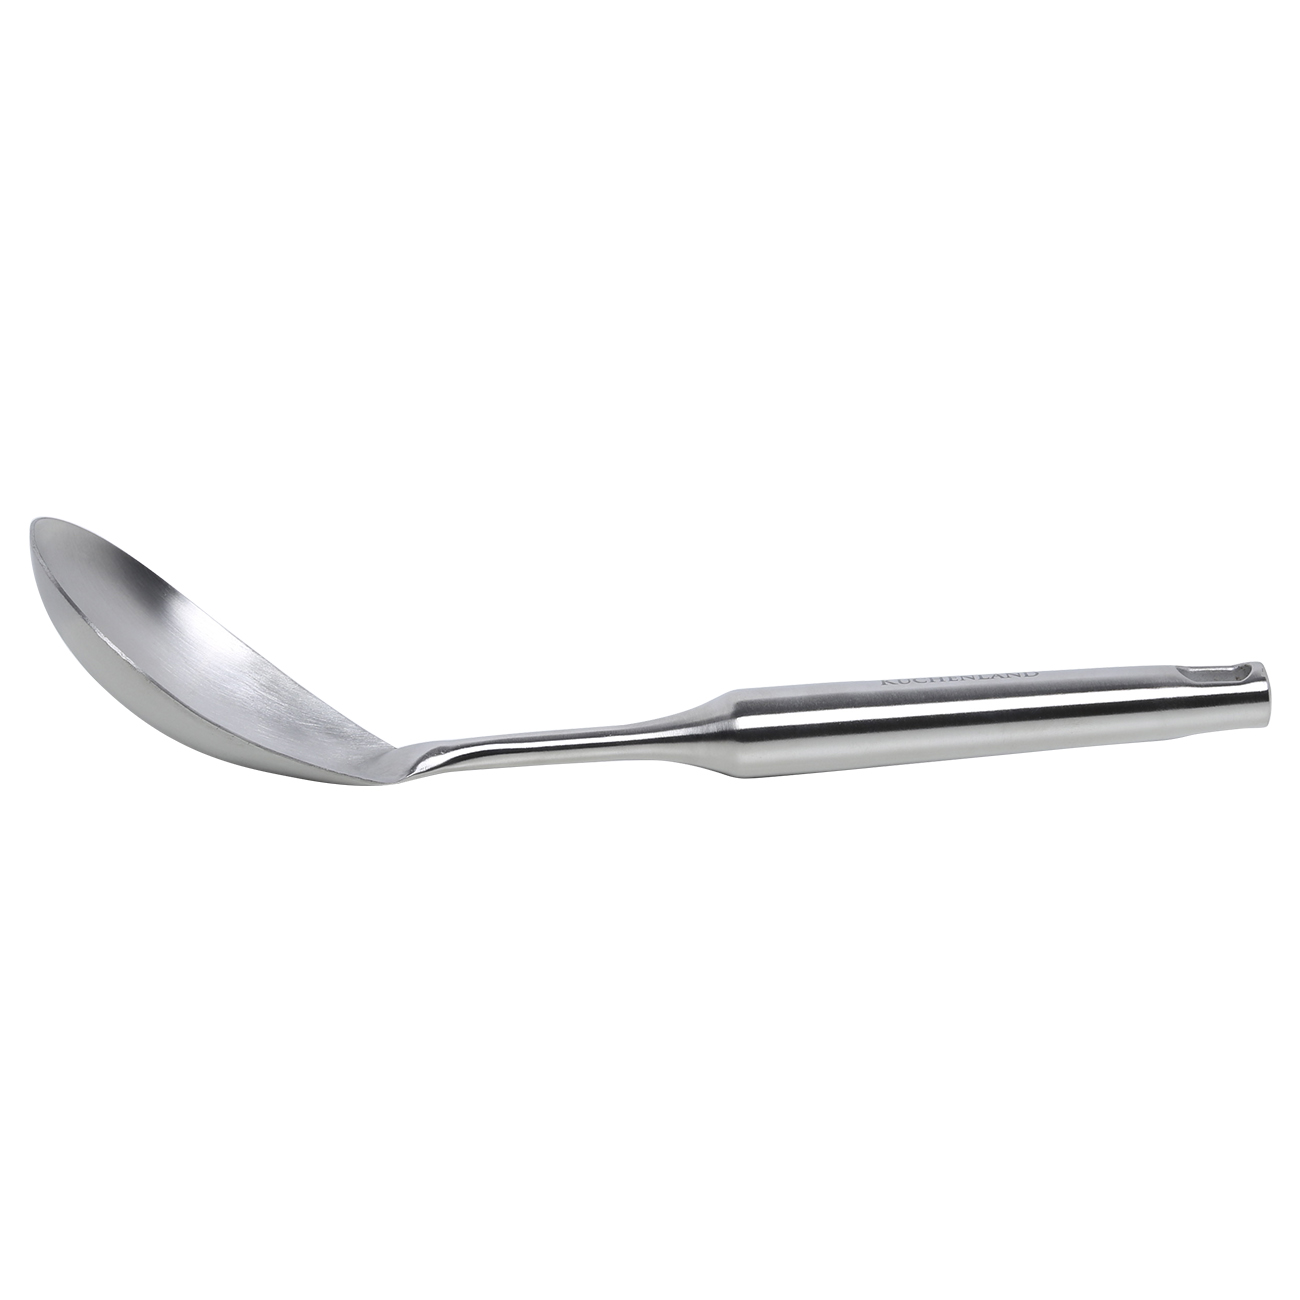 Serving spoon, 31 cm, stainless steel, Nova изображение № 2